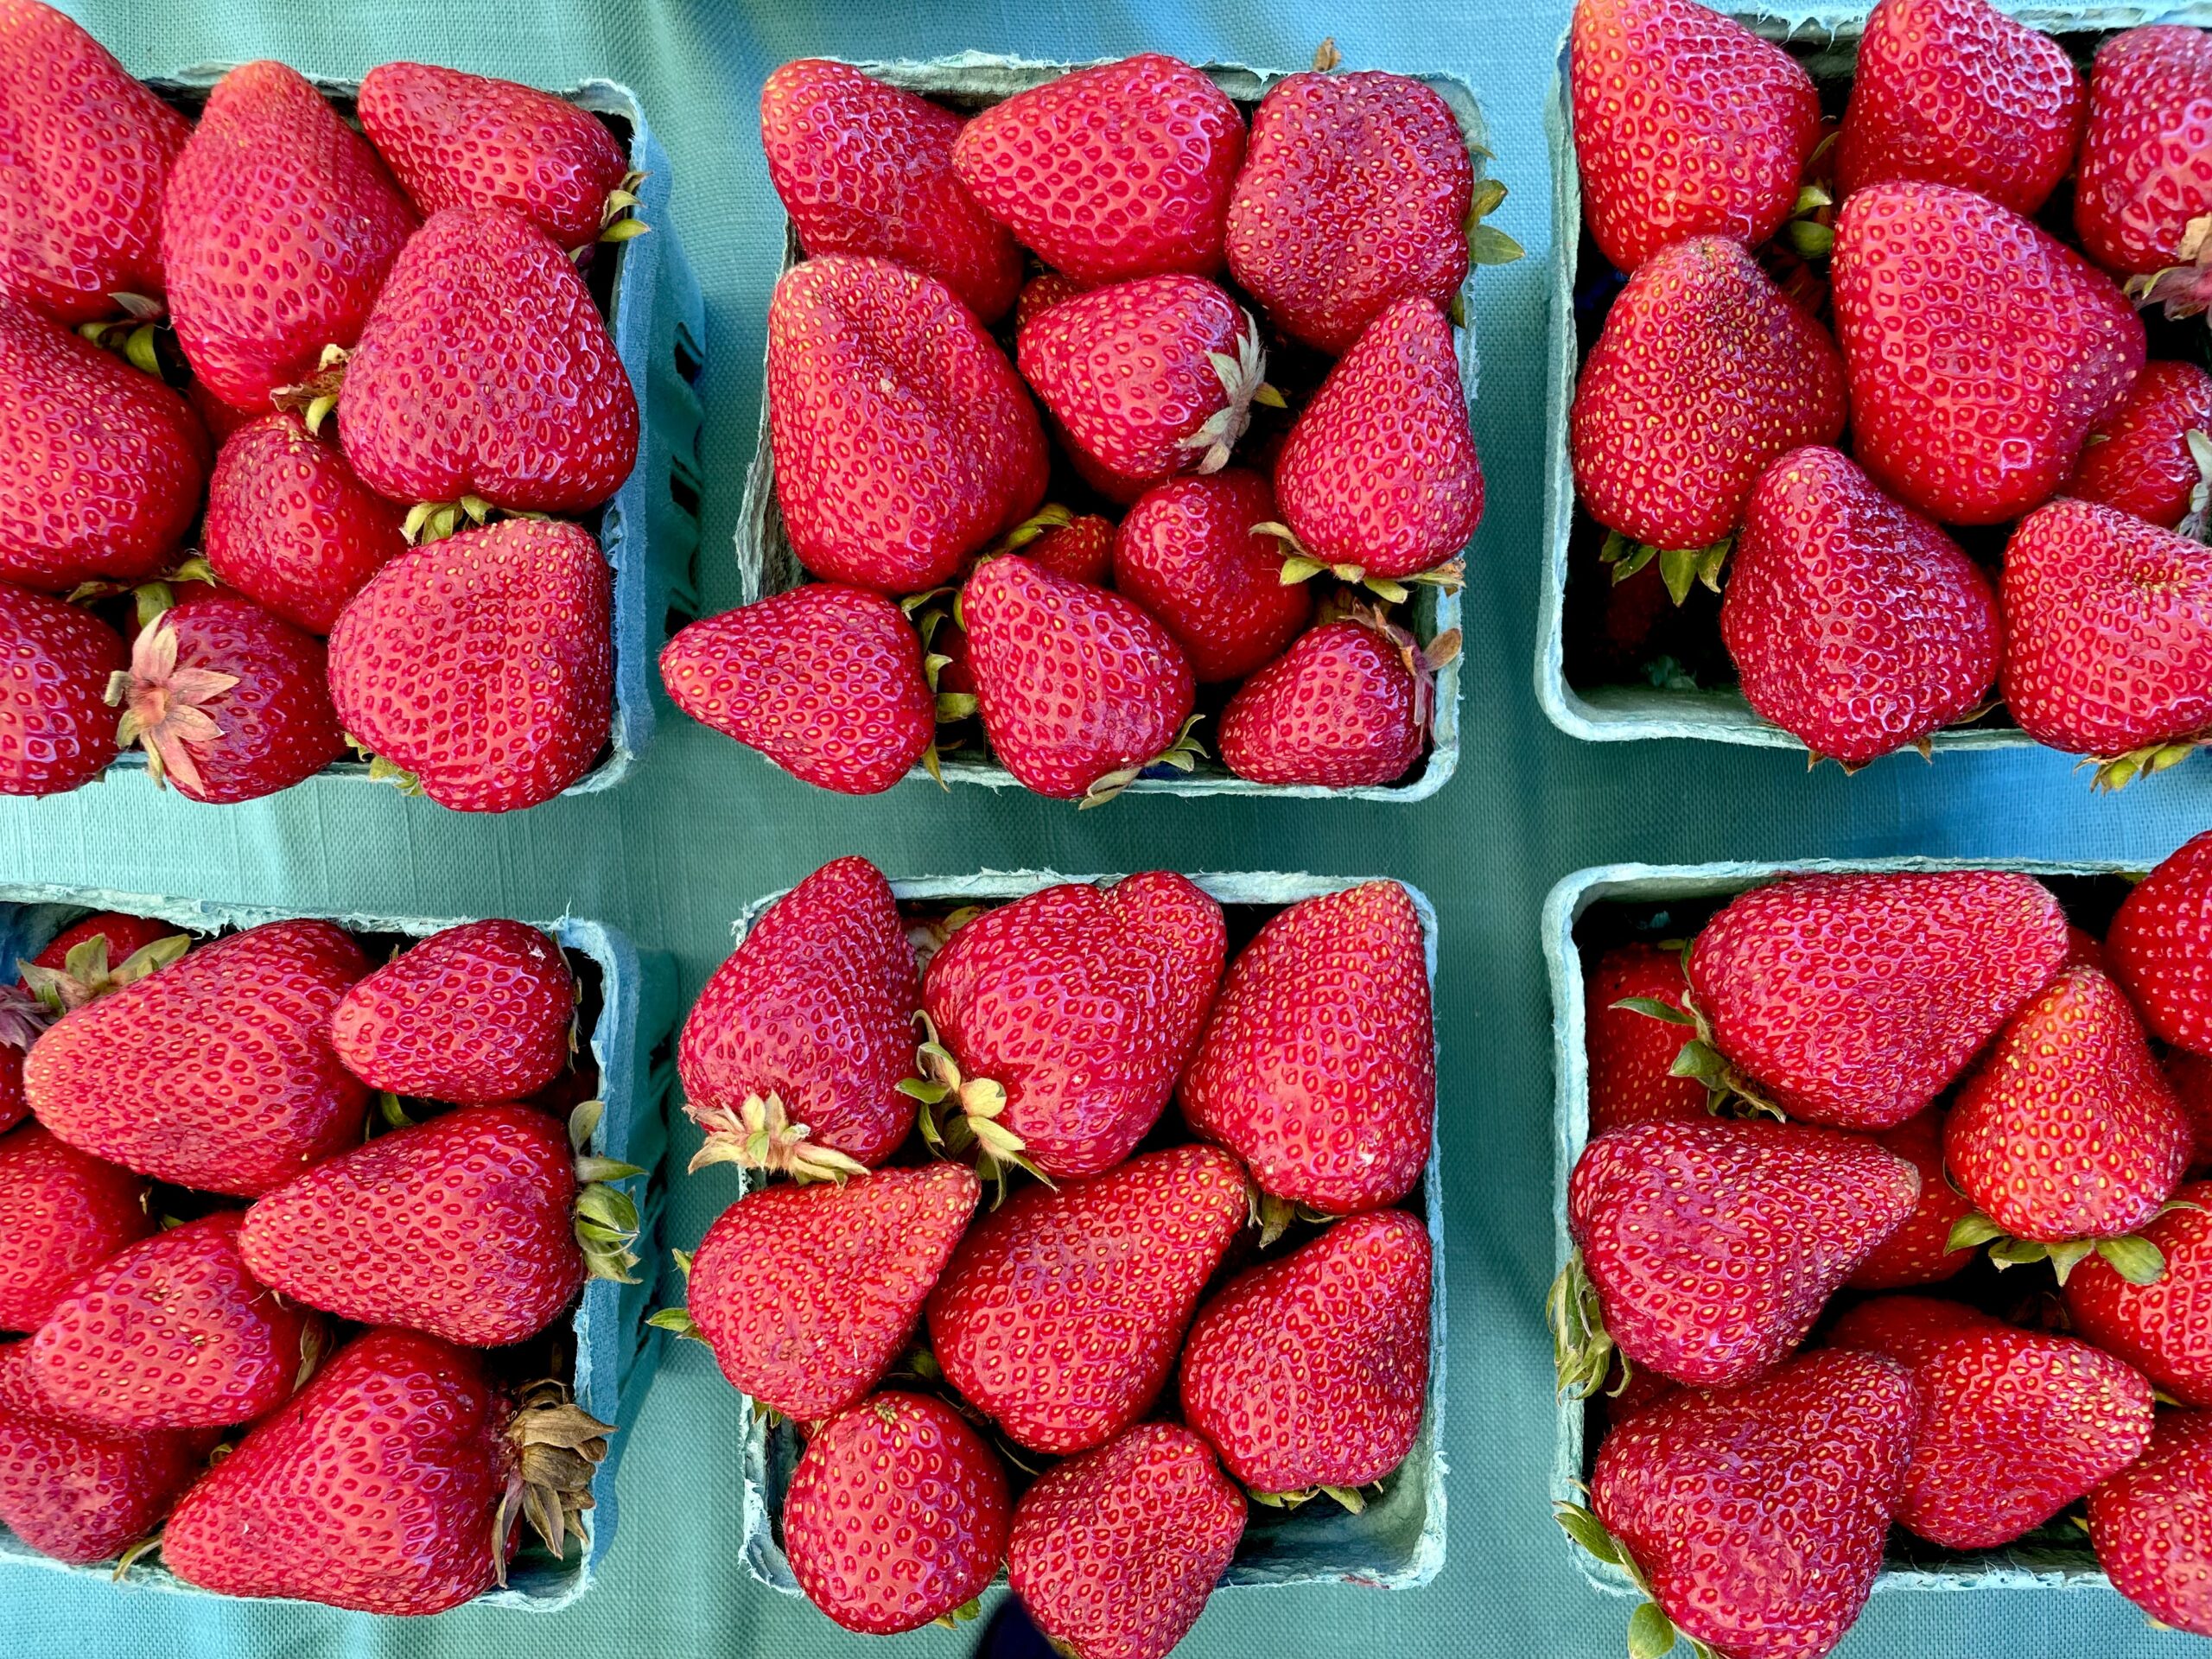 Organic strawberries at Waxwing Farm in the Skagit Valley, Washington